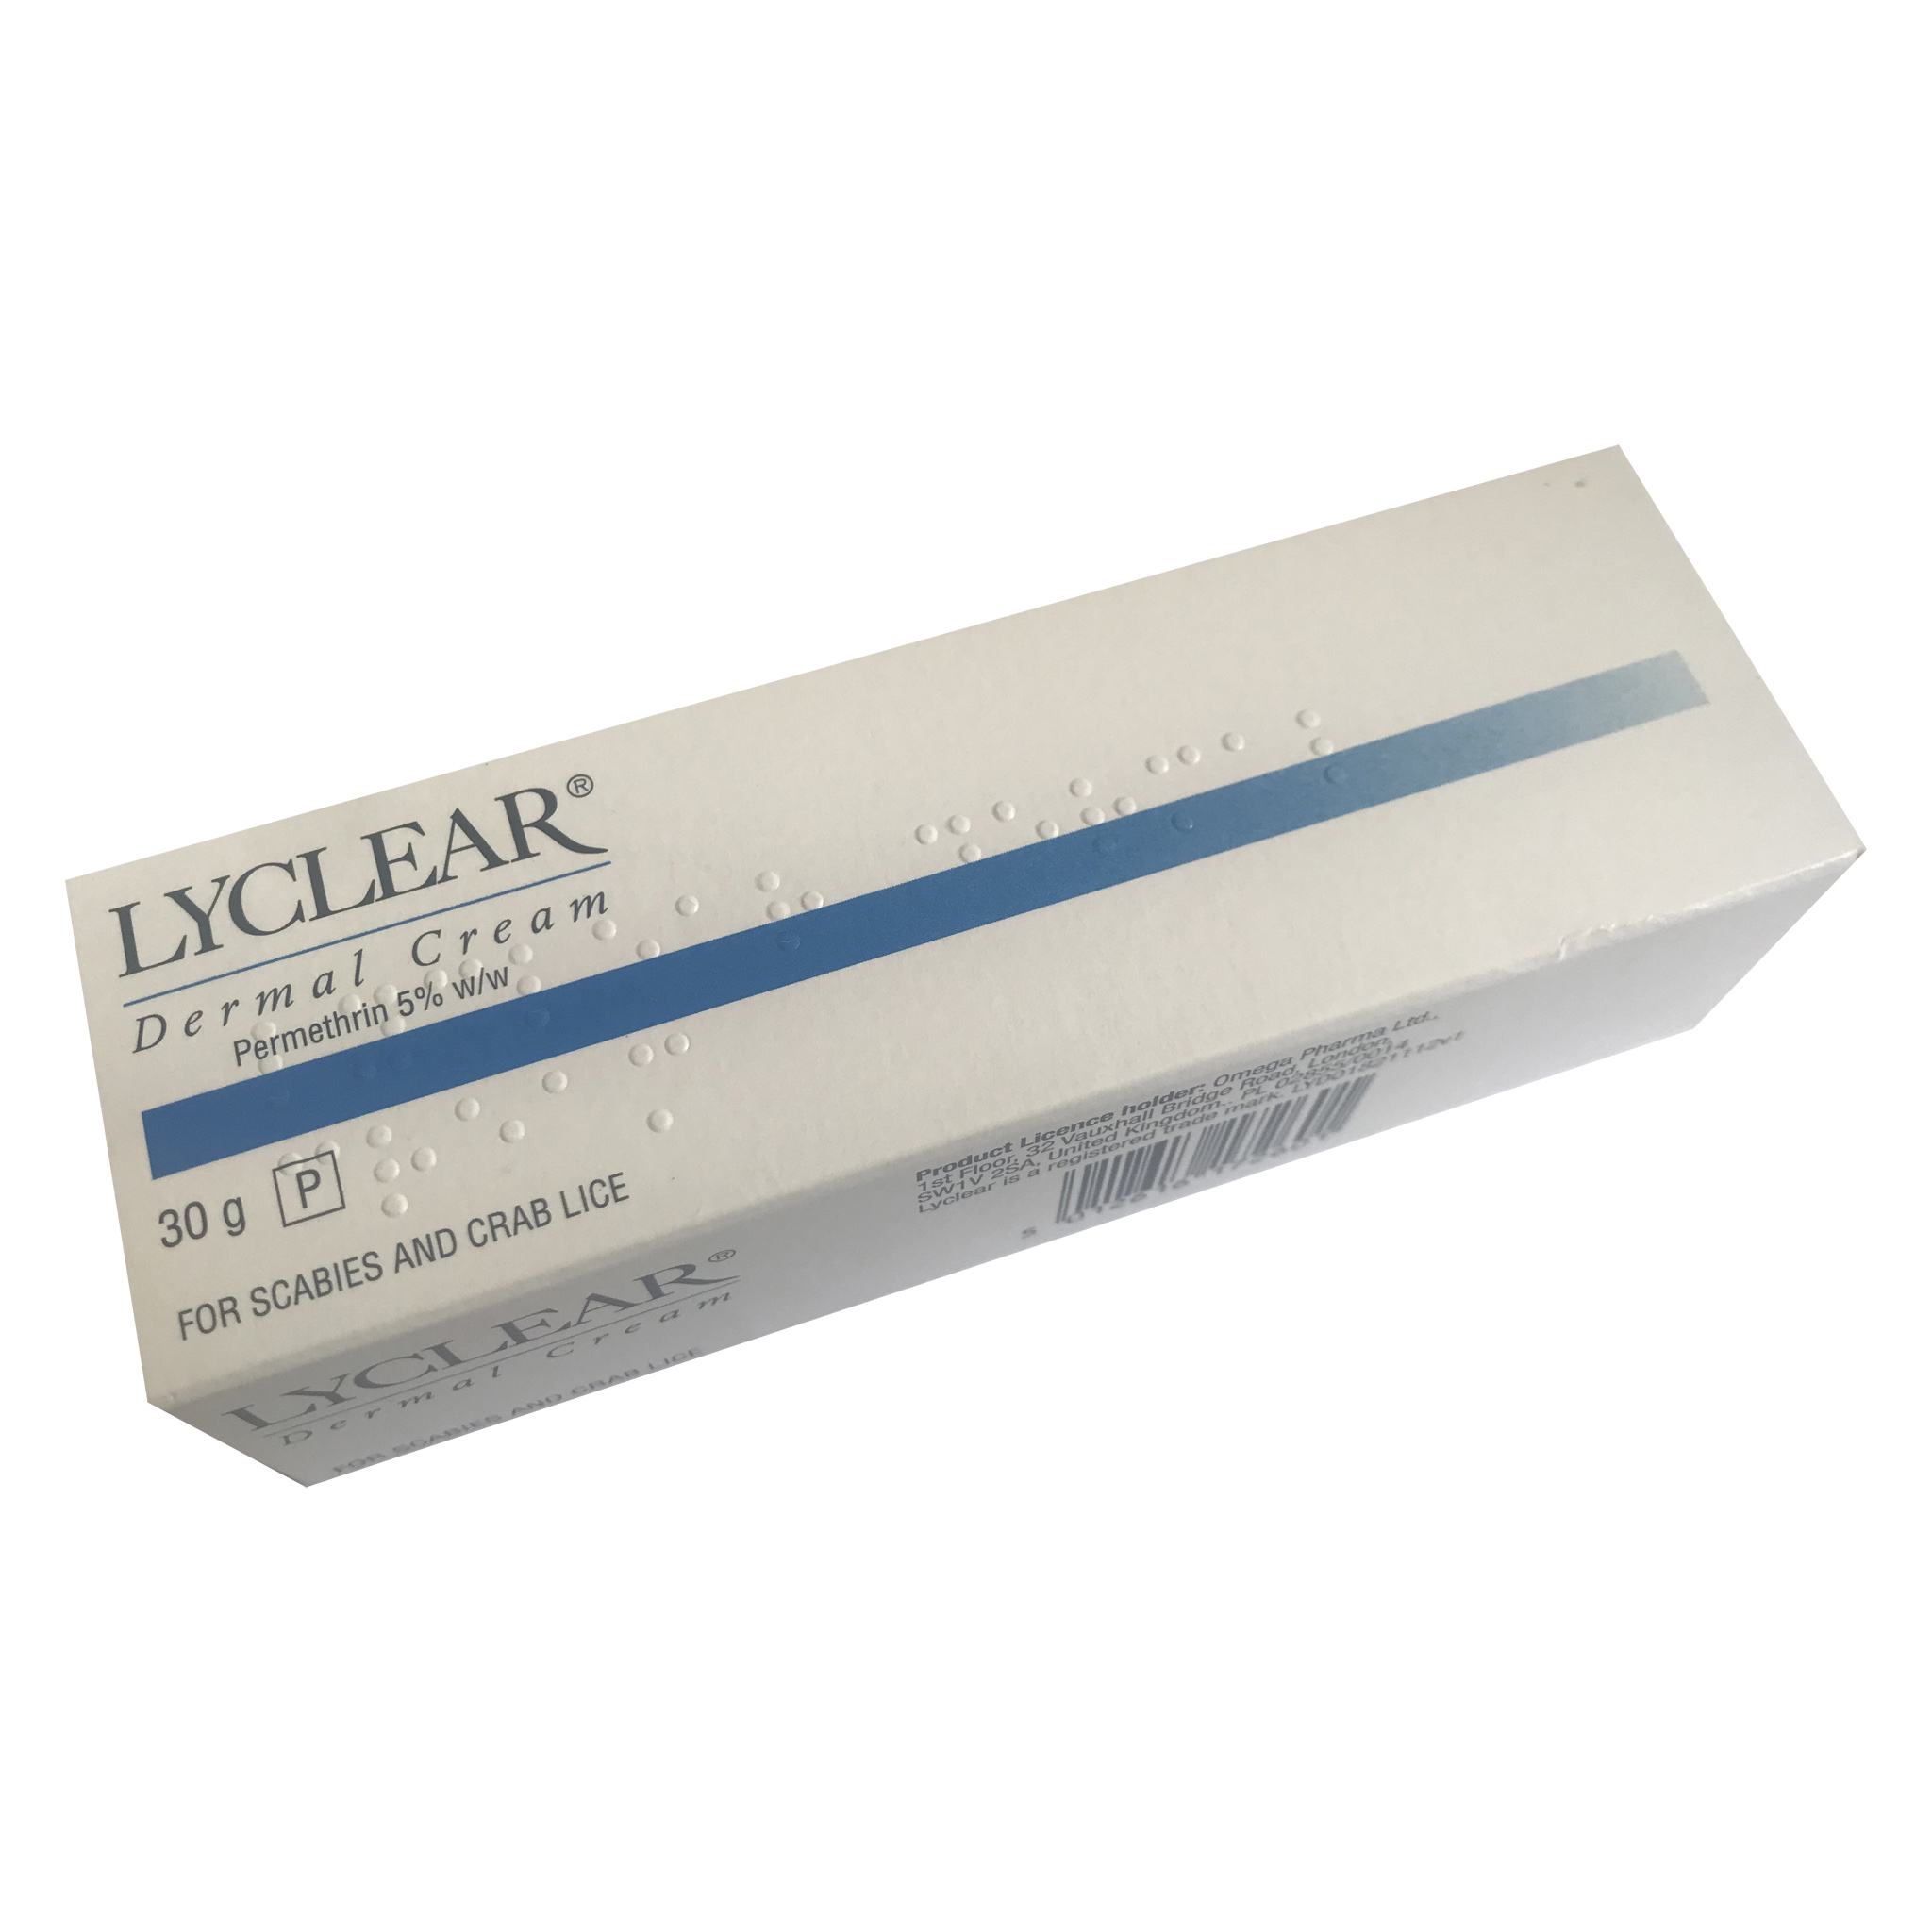 Lyclear Dermal Cream (30g) - 10 Packs